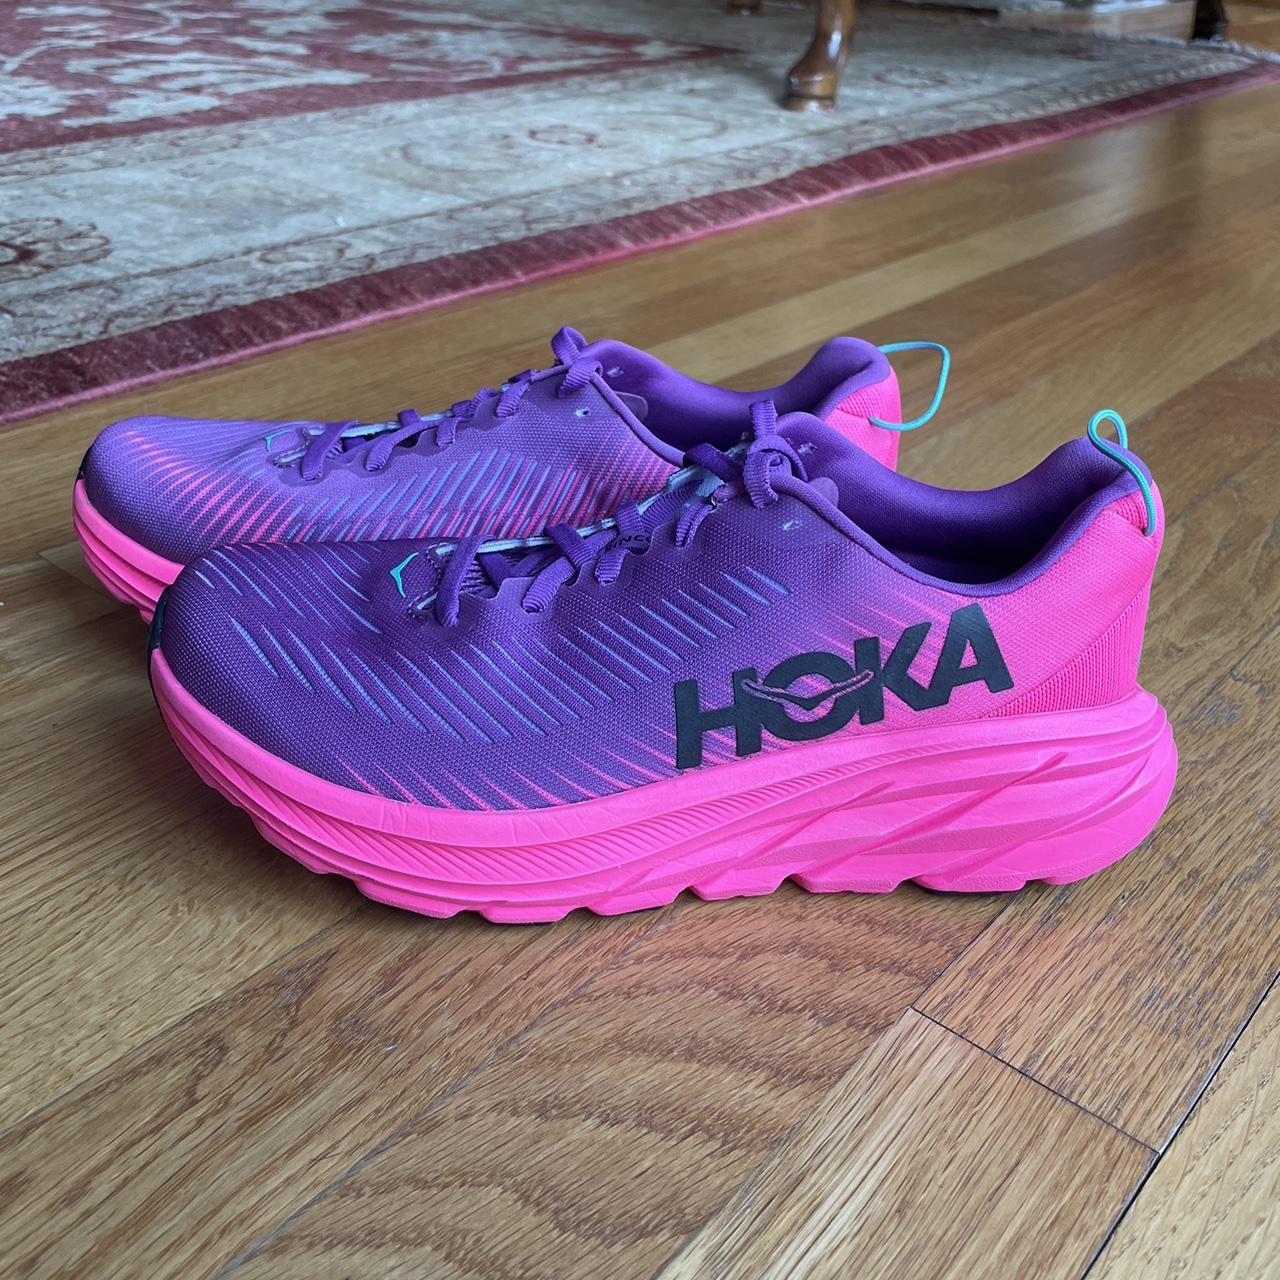 Hoka One One Women's Pink and Purple Trainers | Depop